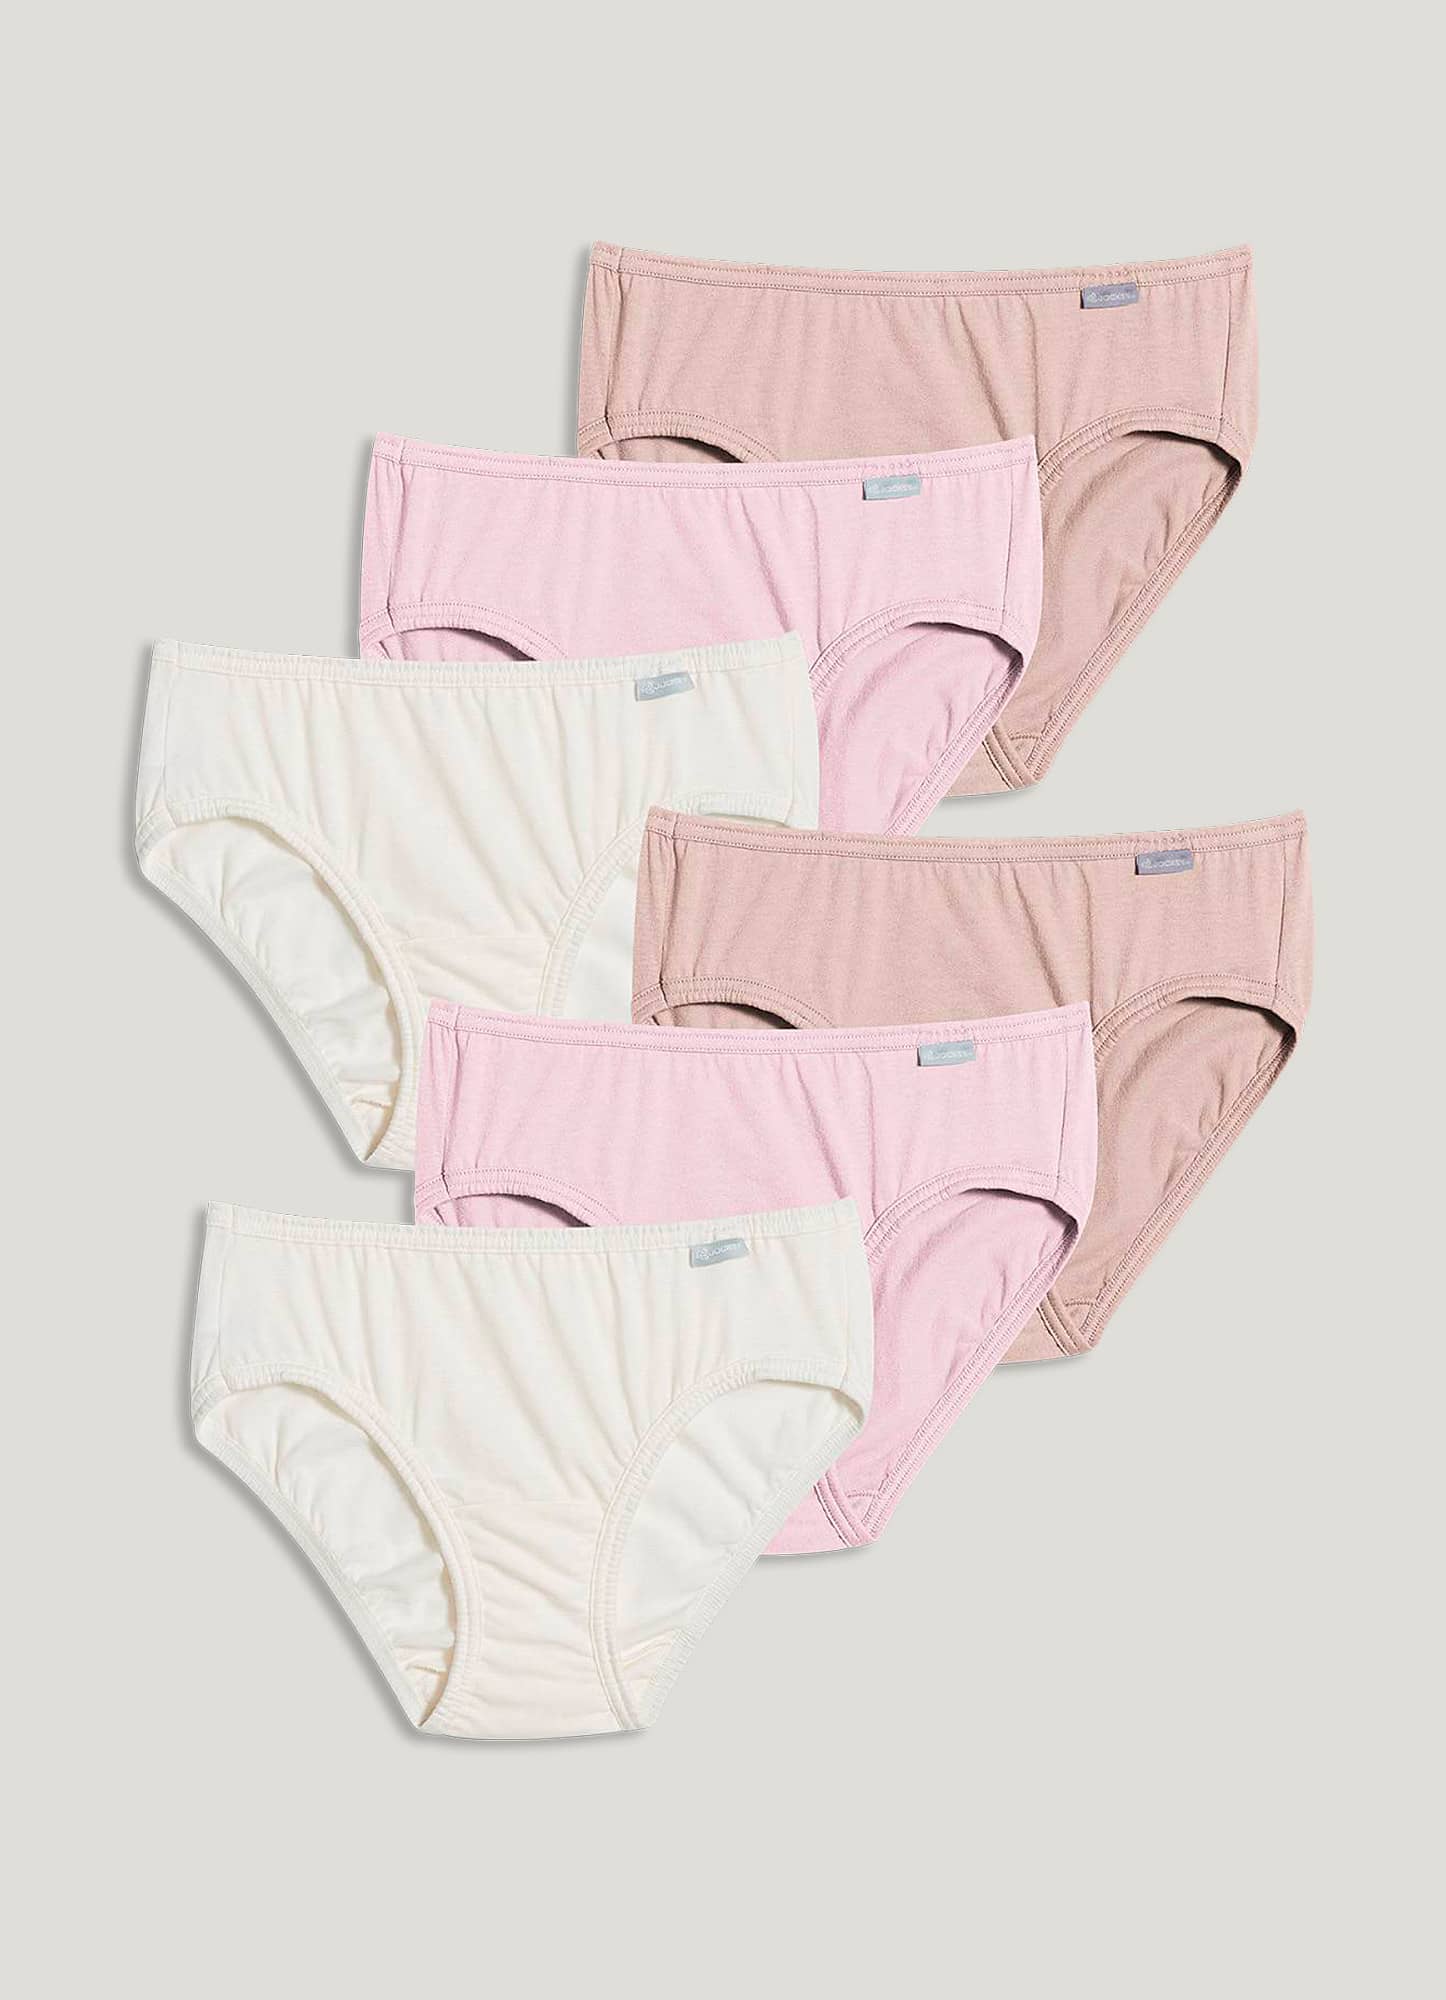 Jockey Women's Underwear Elance Hipster - 6 Pack, Ivory/Light/Pink